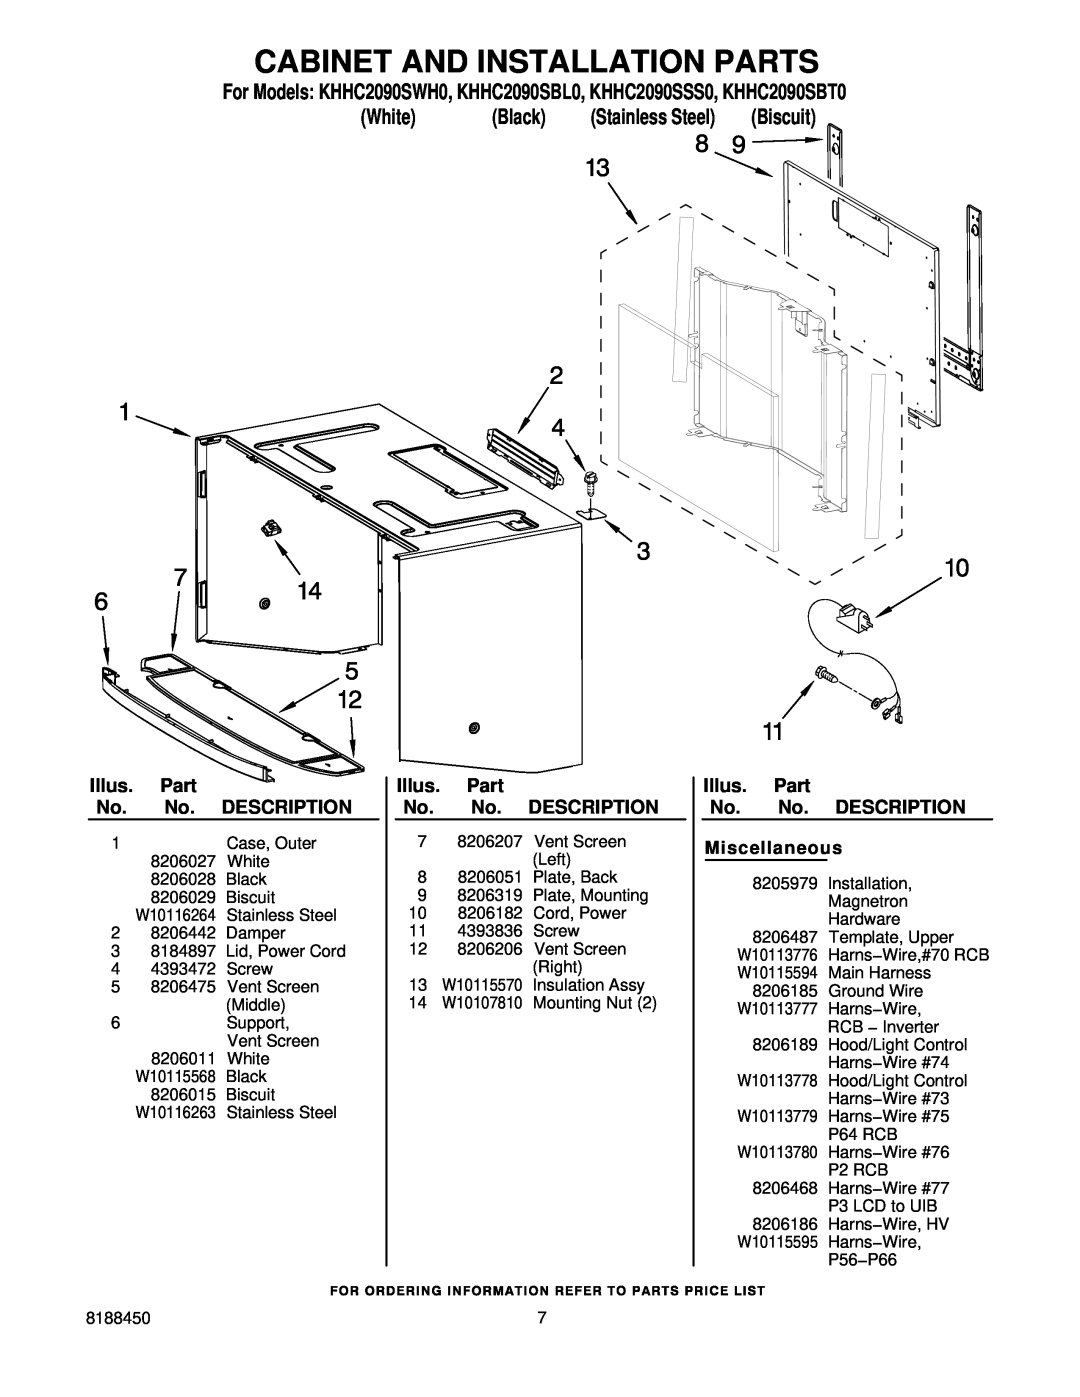 KitchenAid KHHC2090SBL0 manual Cabinet And Installation Parts, Illus. Part No. No. DESCRIPTION Miscellaneous, White, Black 